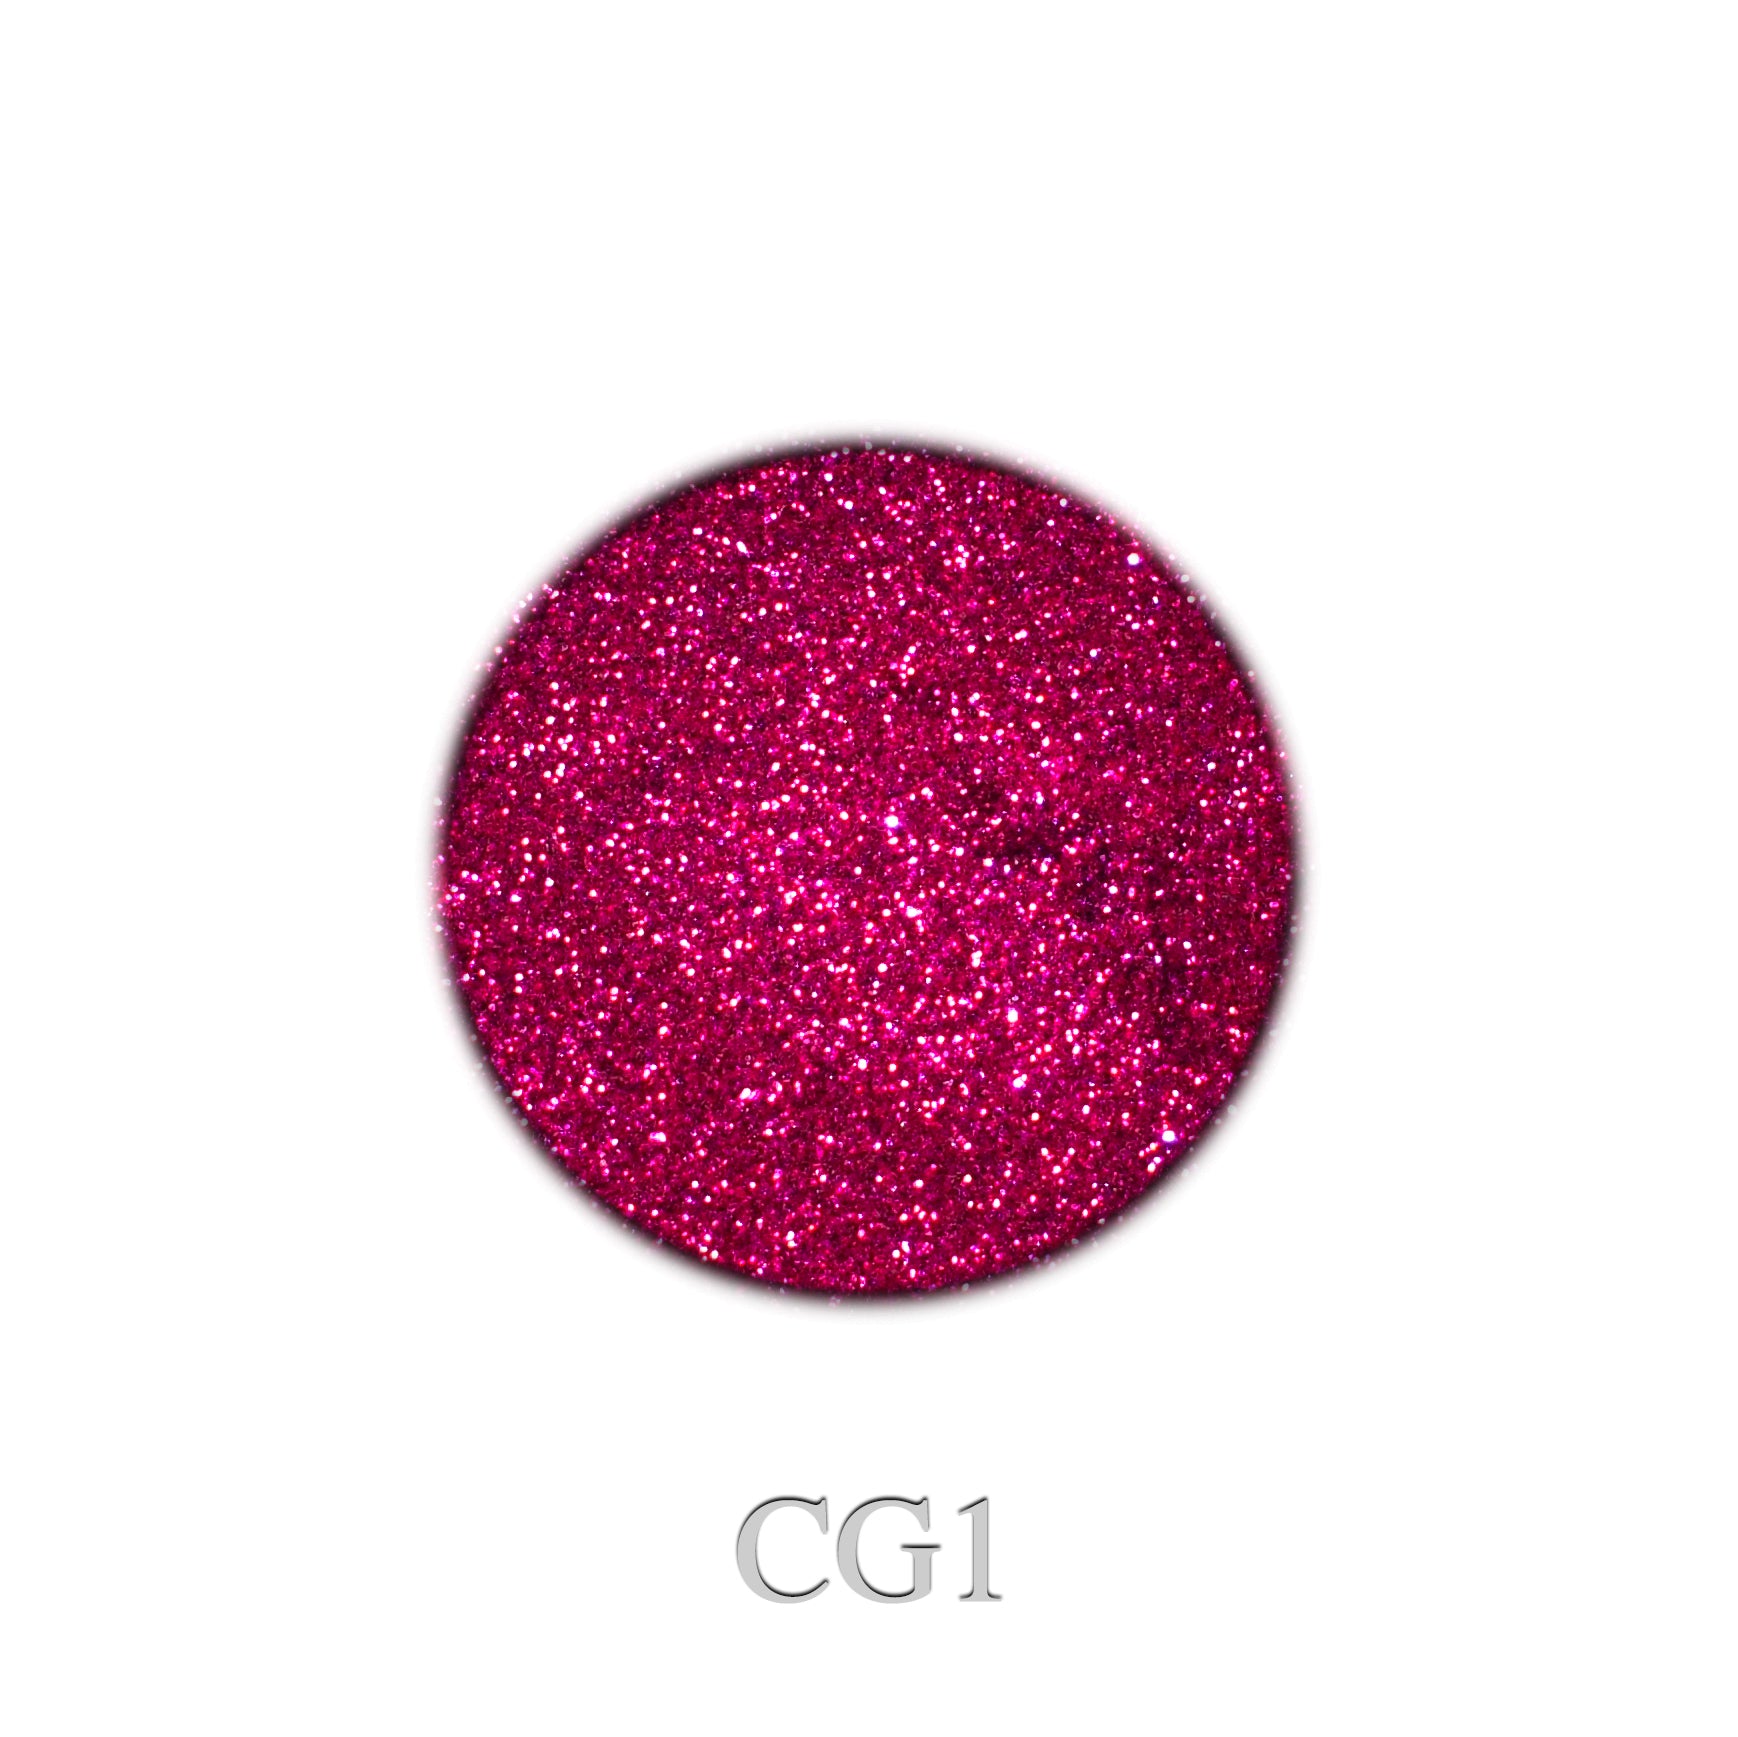 Cosmopolitan Glitter CG1